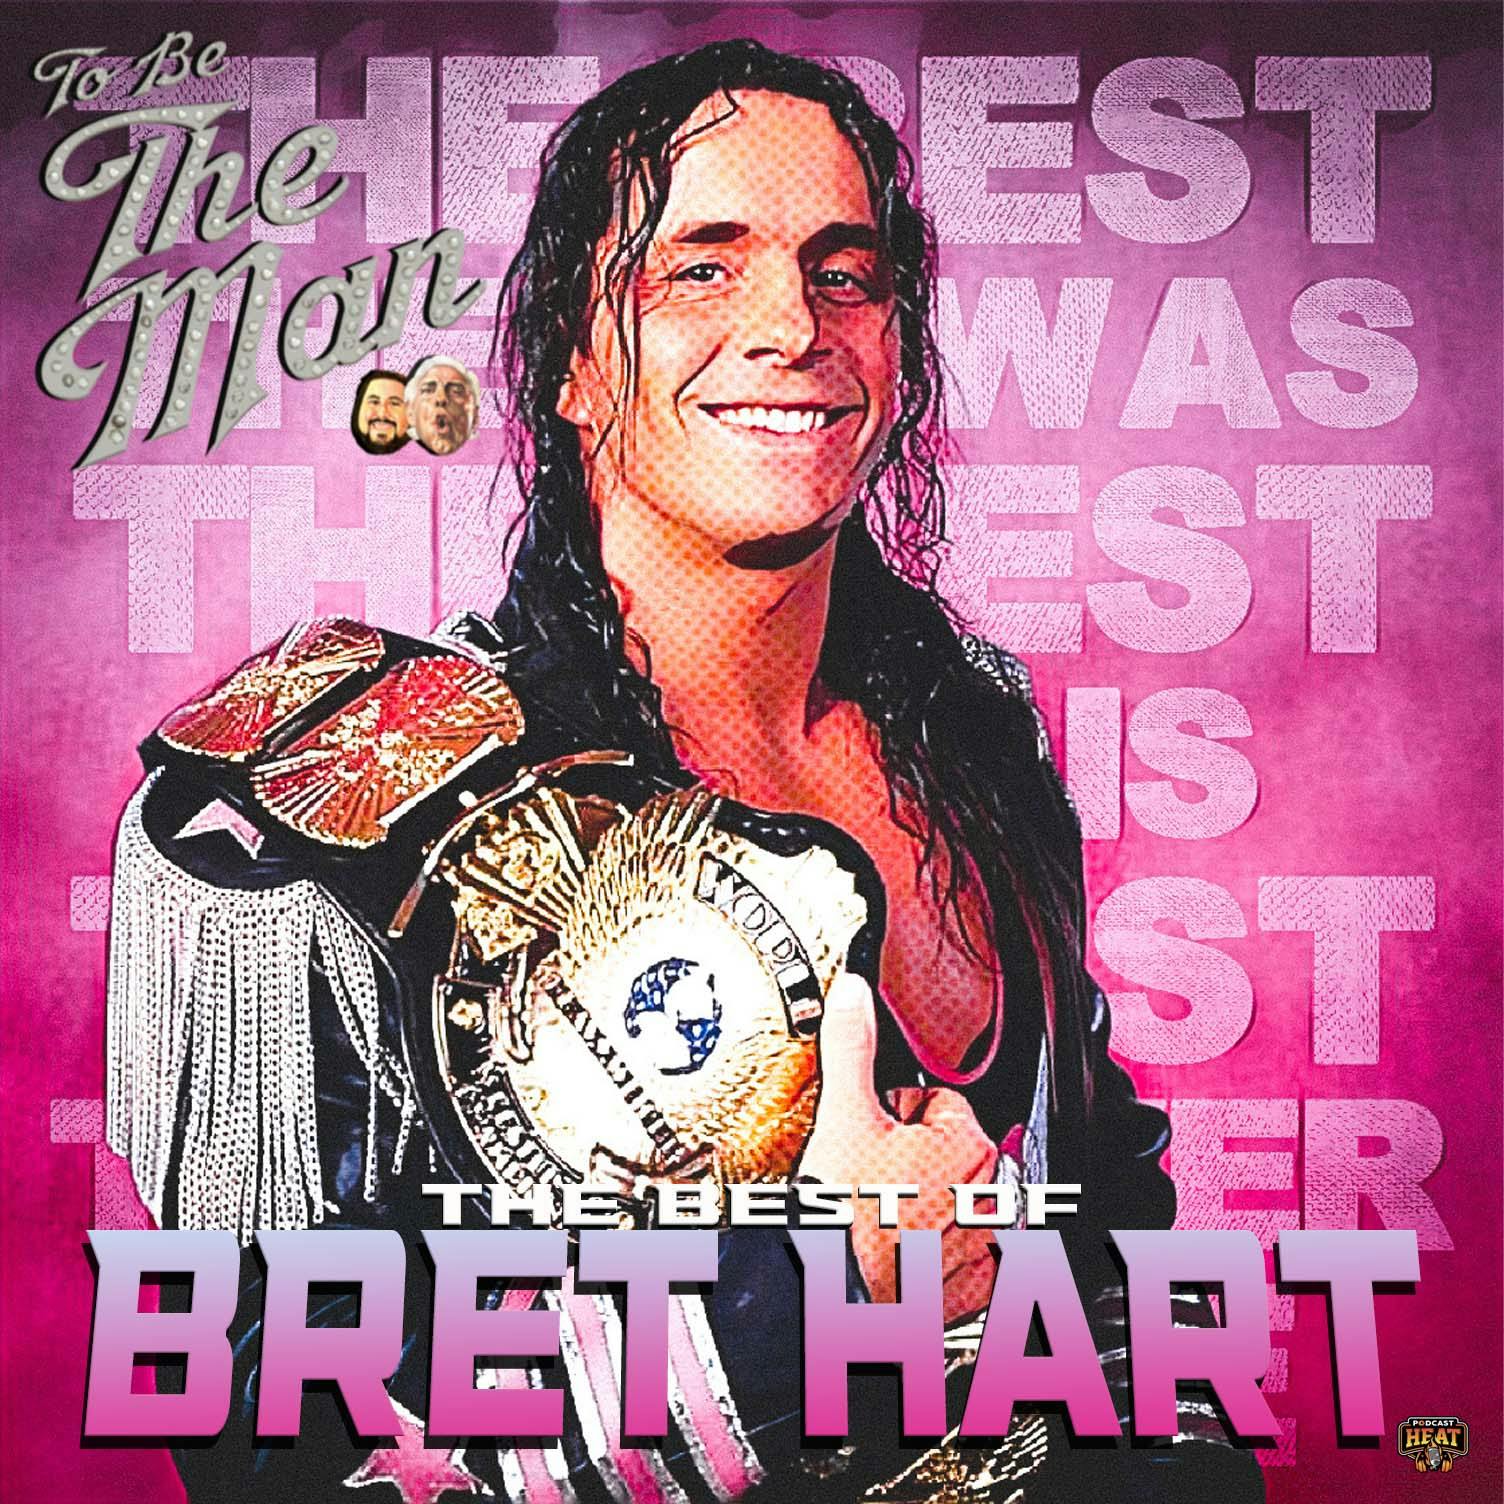 The Best Of Bret Hart